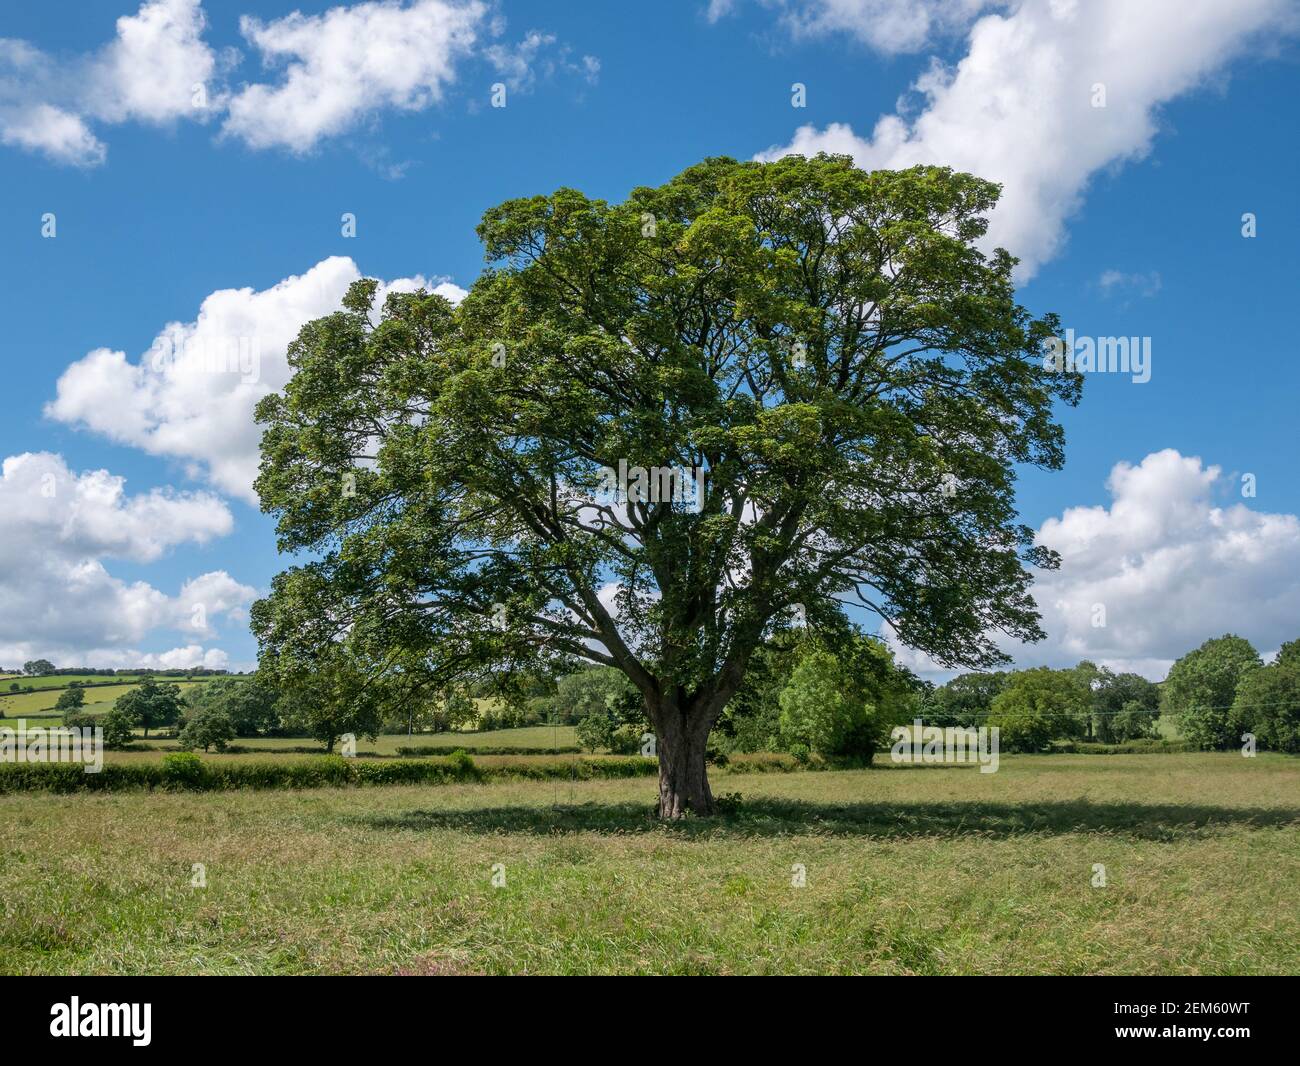 An oak tree with a swing in a field in Cardington, Shropshire. Stock Photo